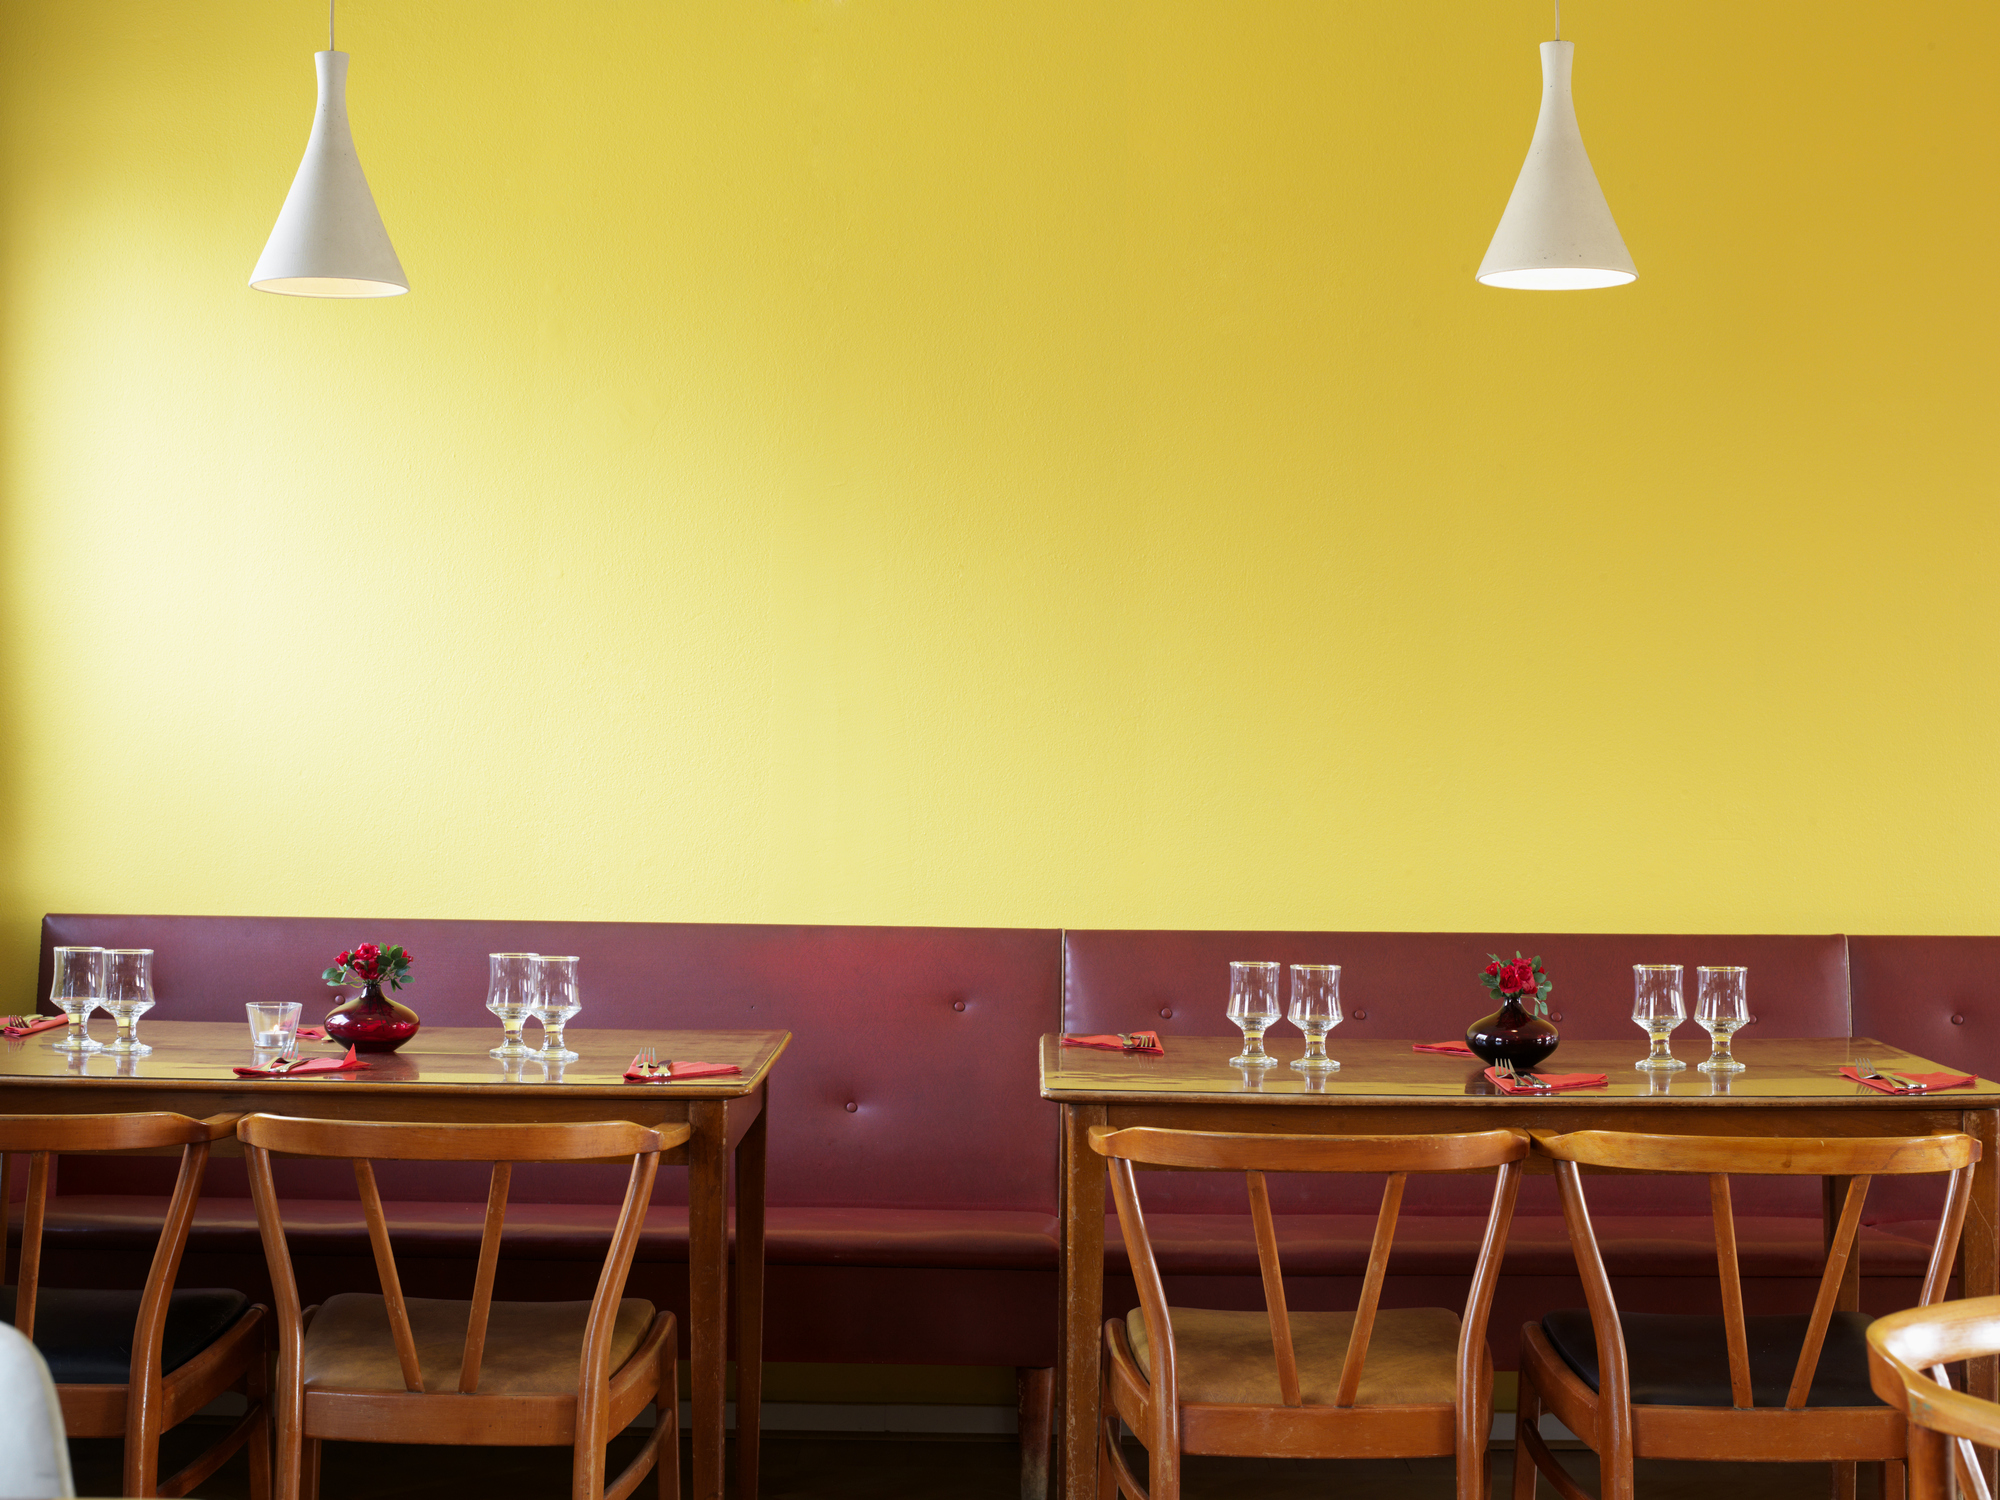 Article image for Deserted dining: Restaurant patronage plummets as coronavirus outbreak escalates